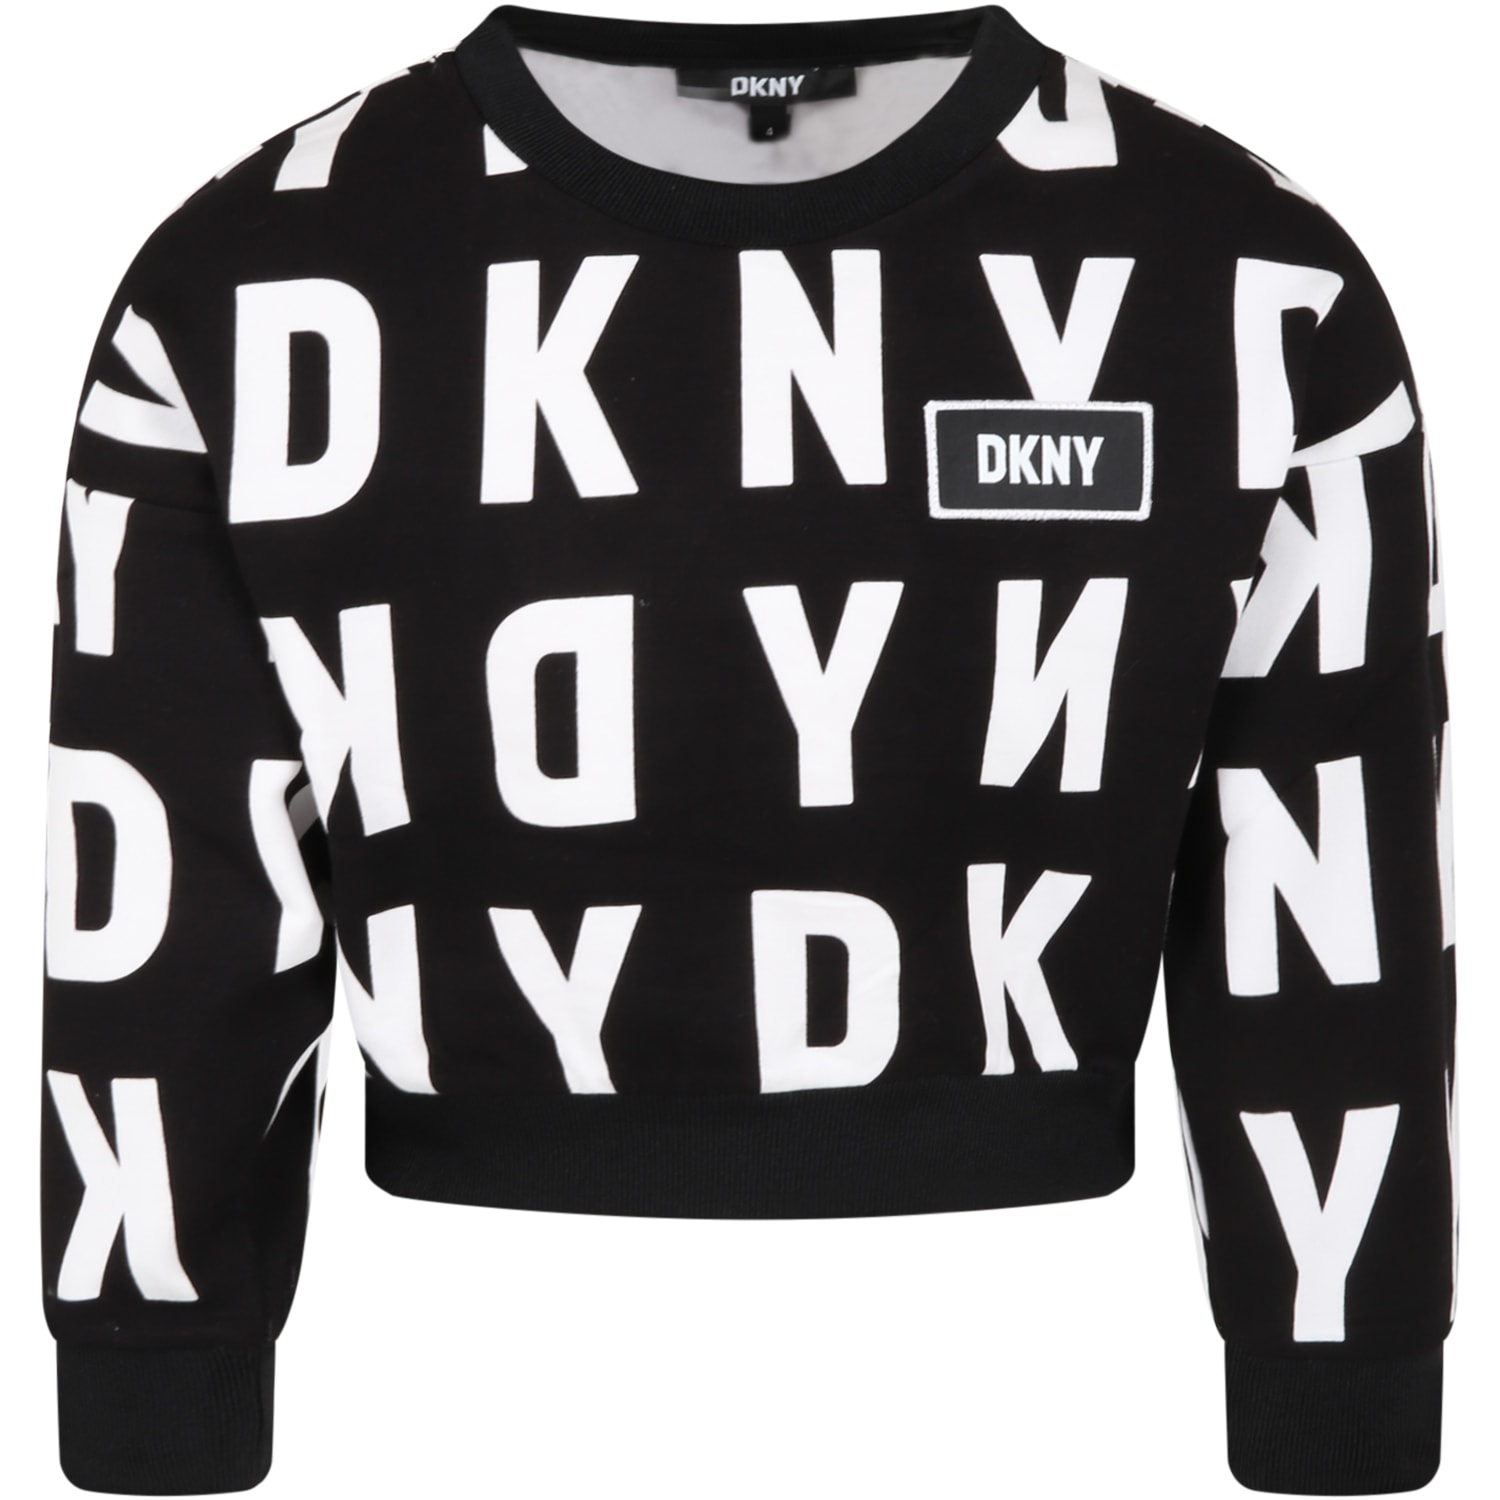 DKNY Black Sweatshirt For Girl With Logos